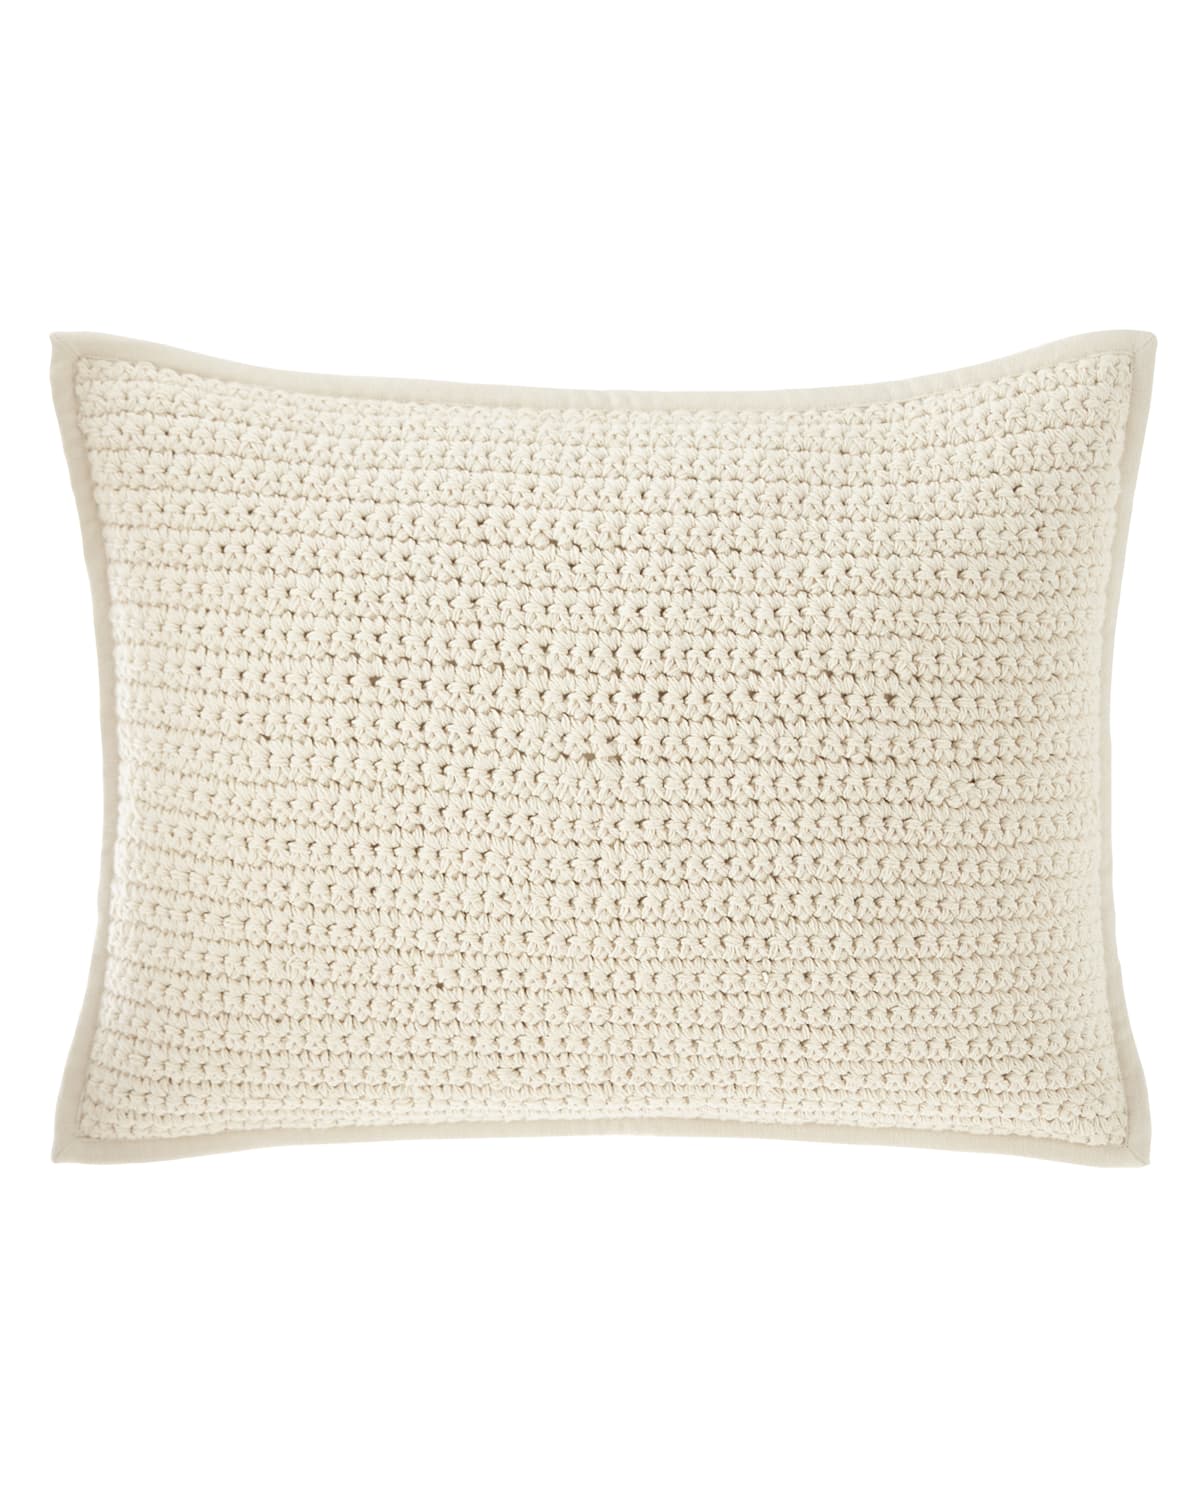 Image Ralph Lauren Home Blair Decorative Pillow, 15" x 20"